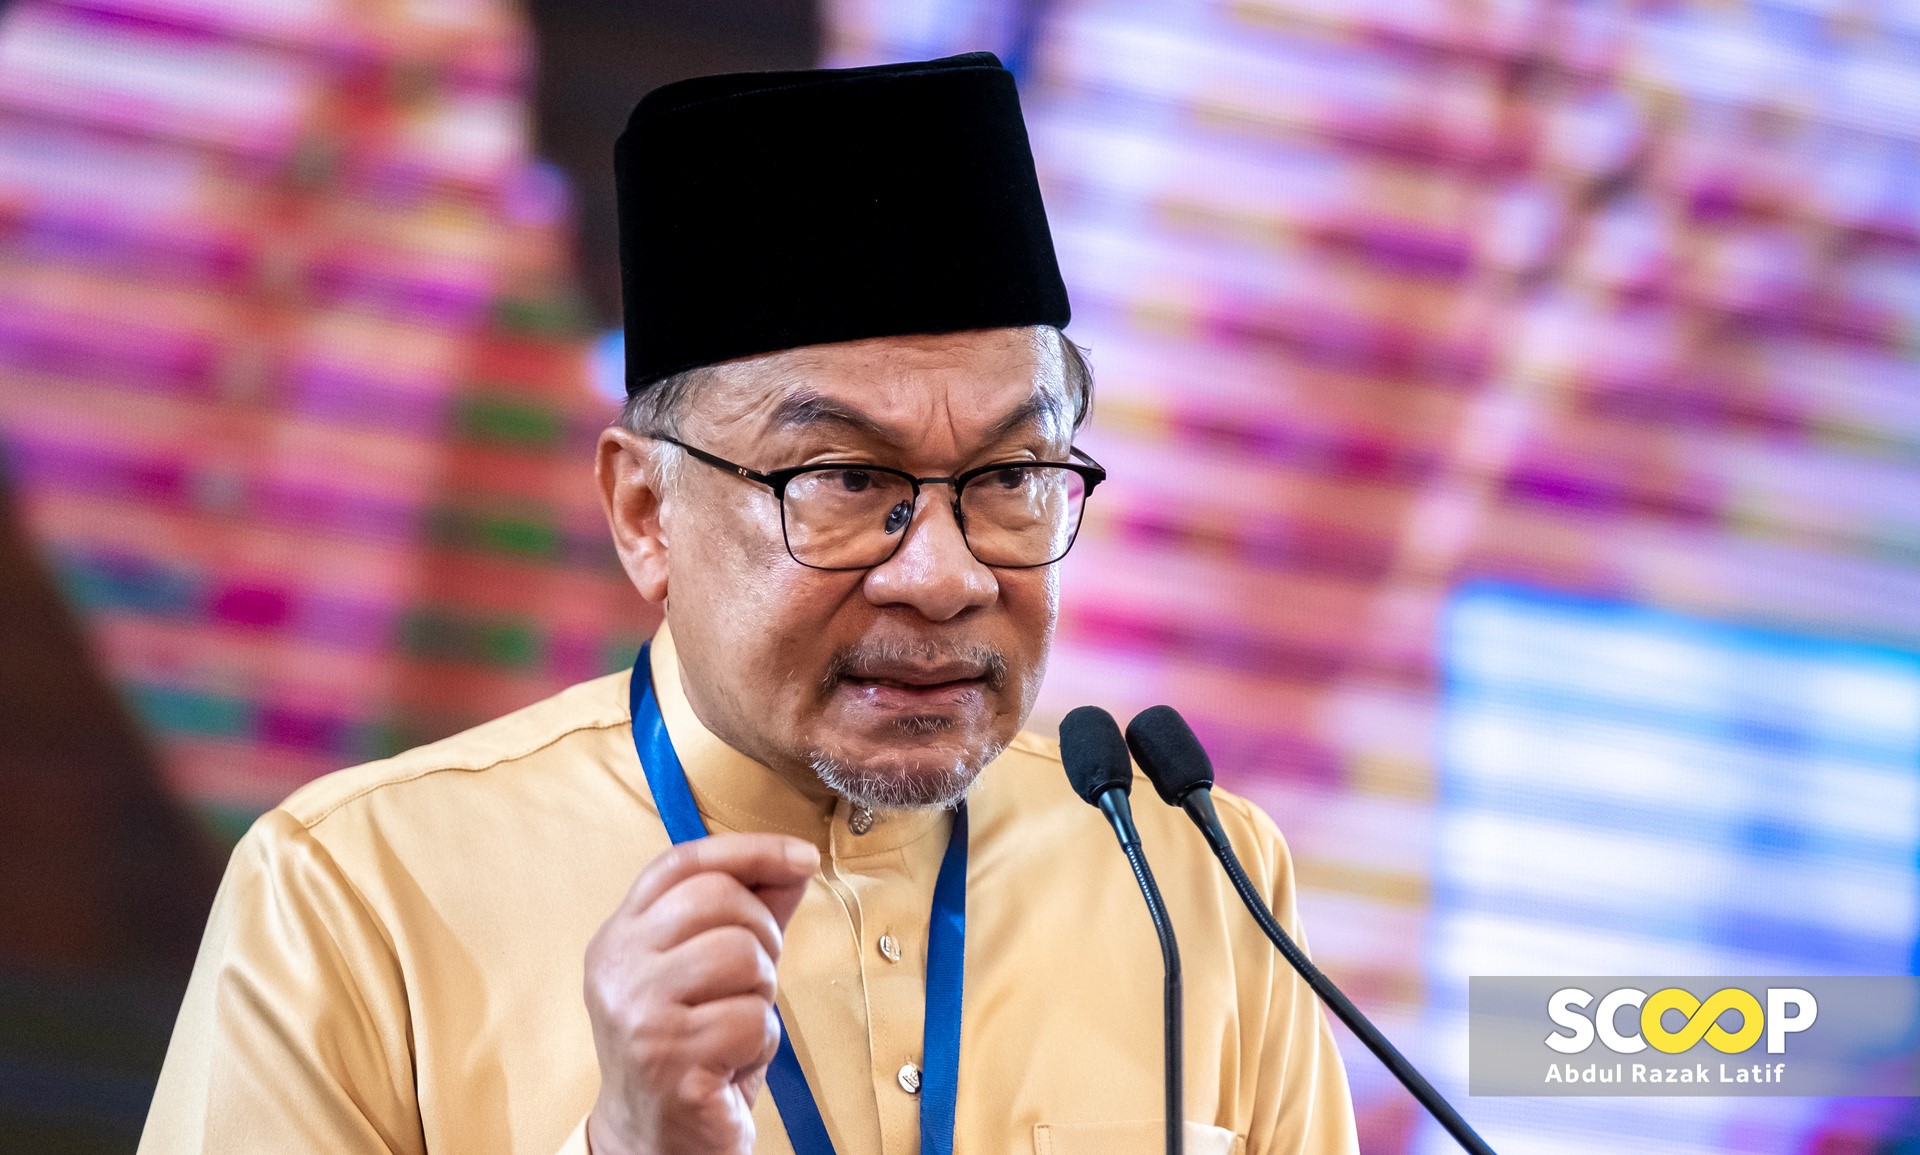 Civil servants salary hike achievable through prudent financial management, says Anwar